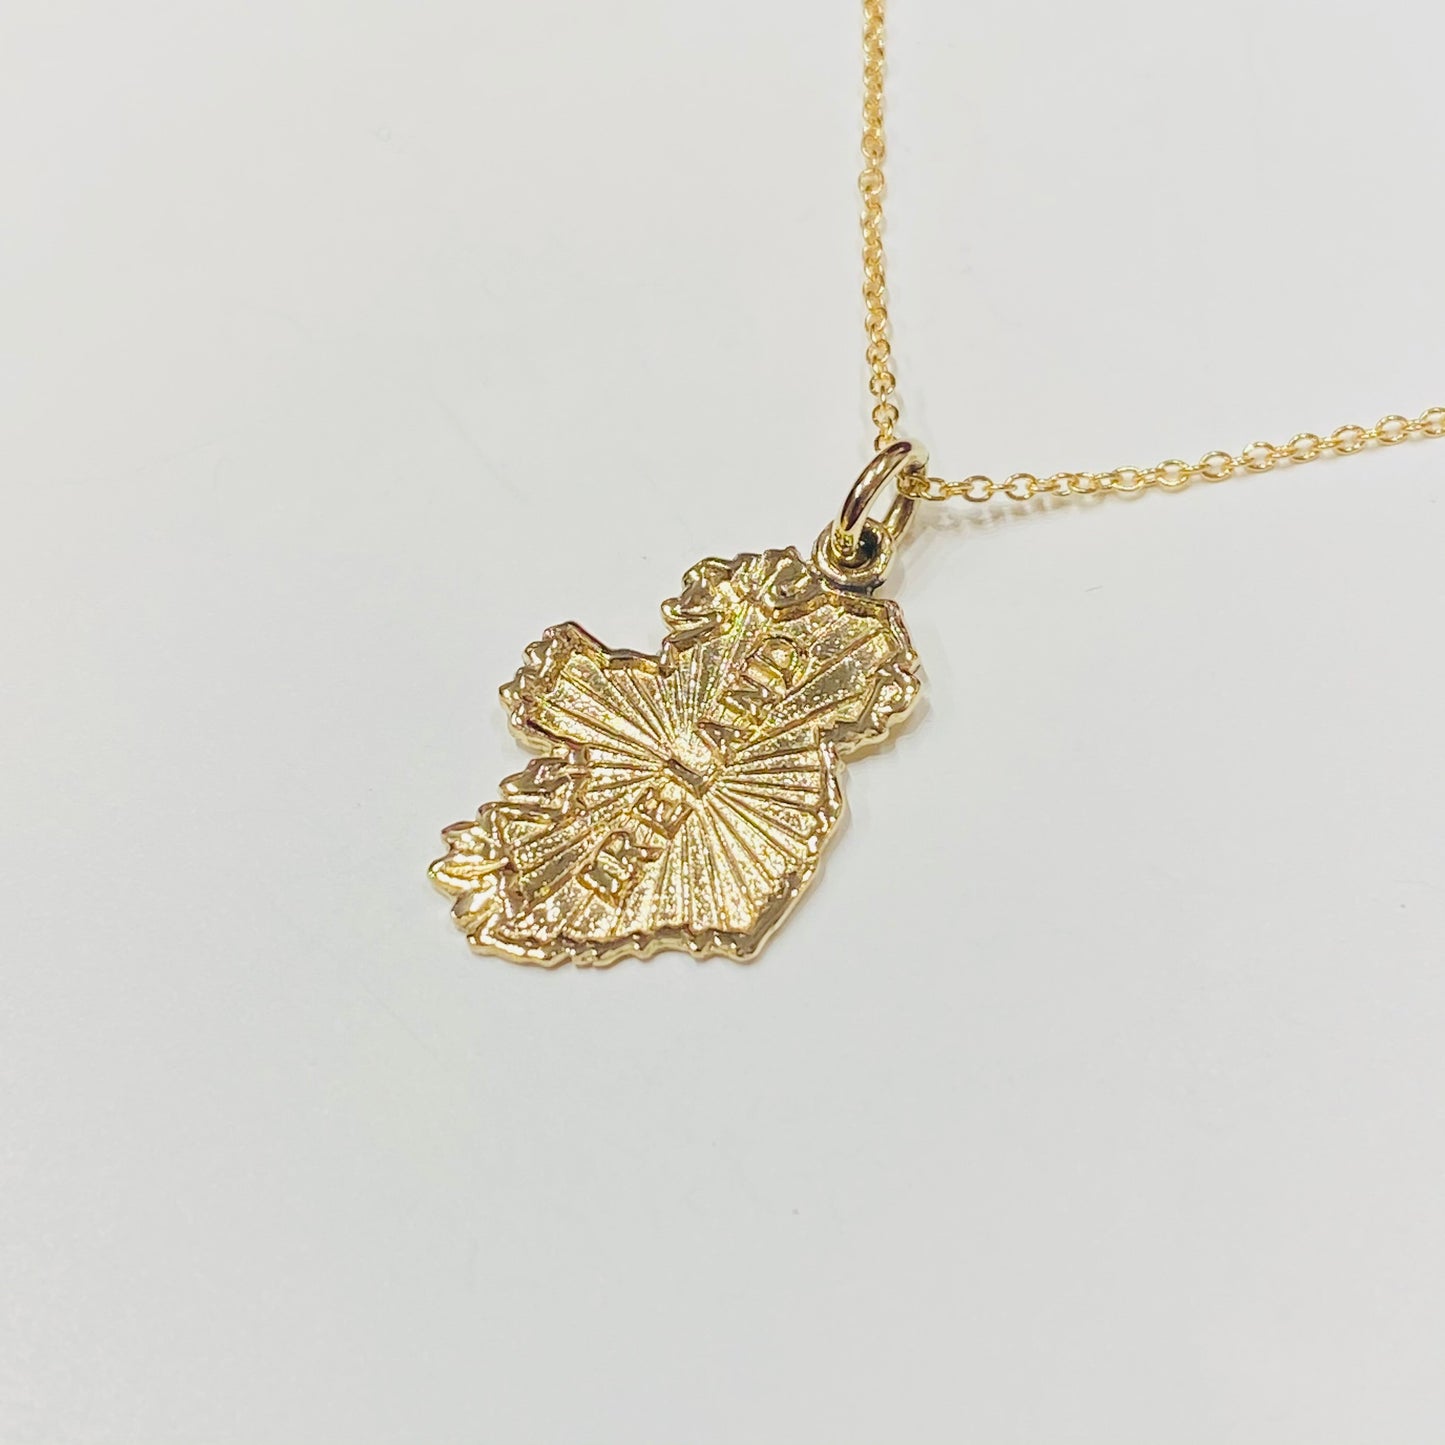 9ct Gold Ireland Necklace - John Ross Jewellers